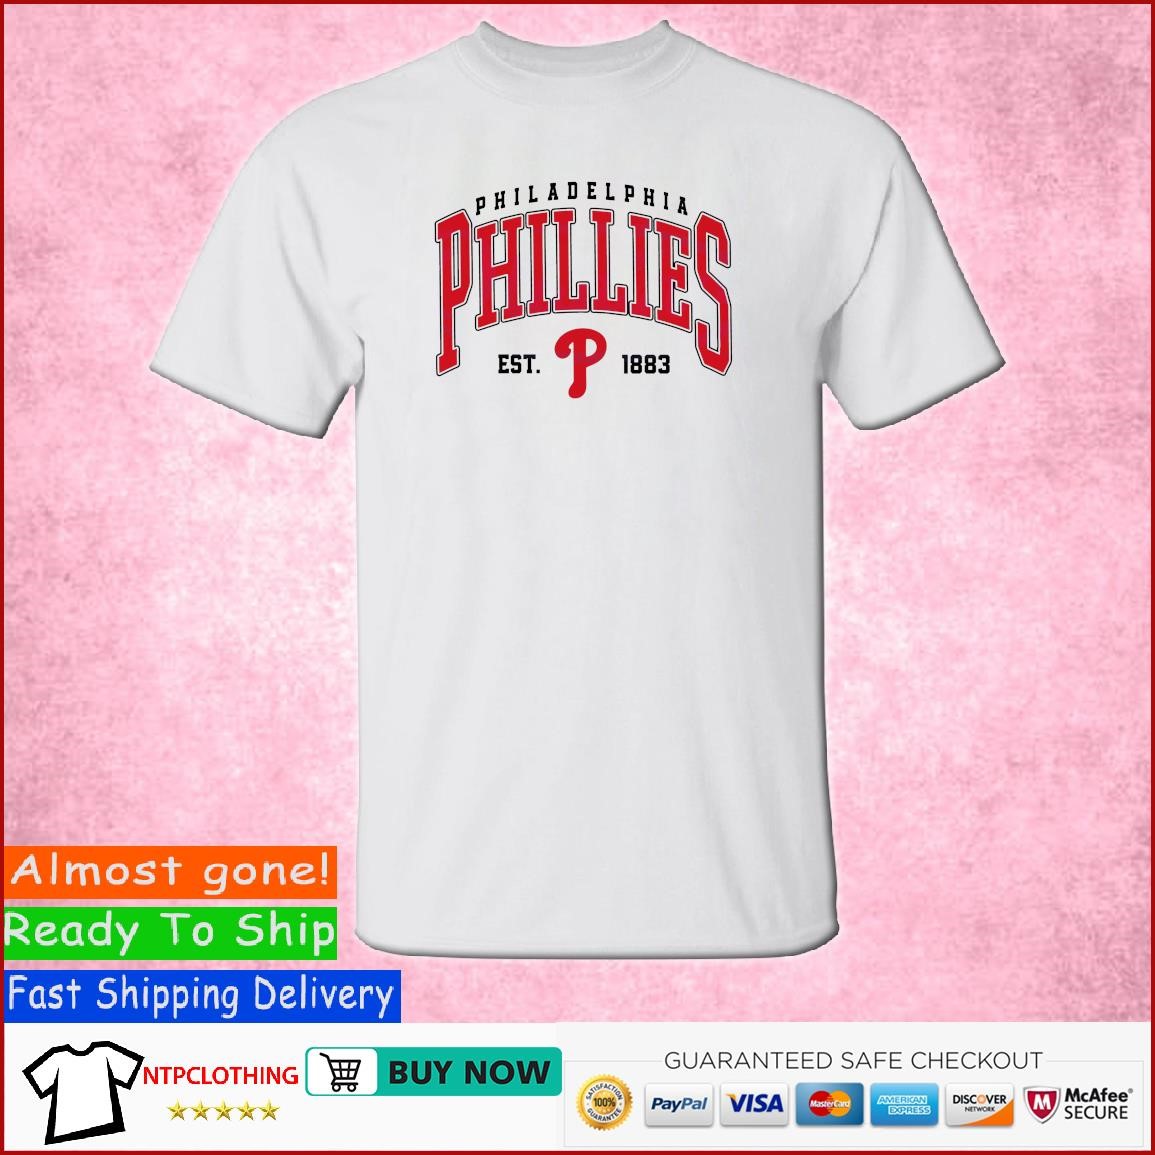 Majestic MLB Philadelphia Phillies Est. 1883 T-Shirt, Youth Red & Blue  SS XL Tee